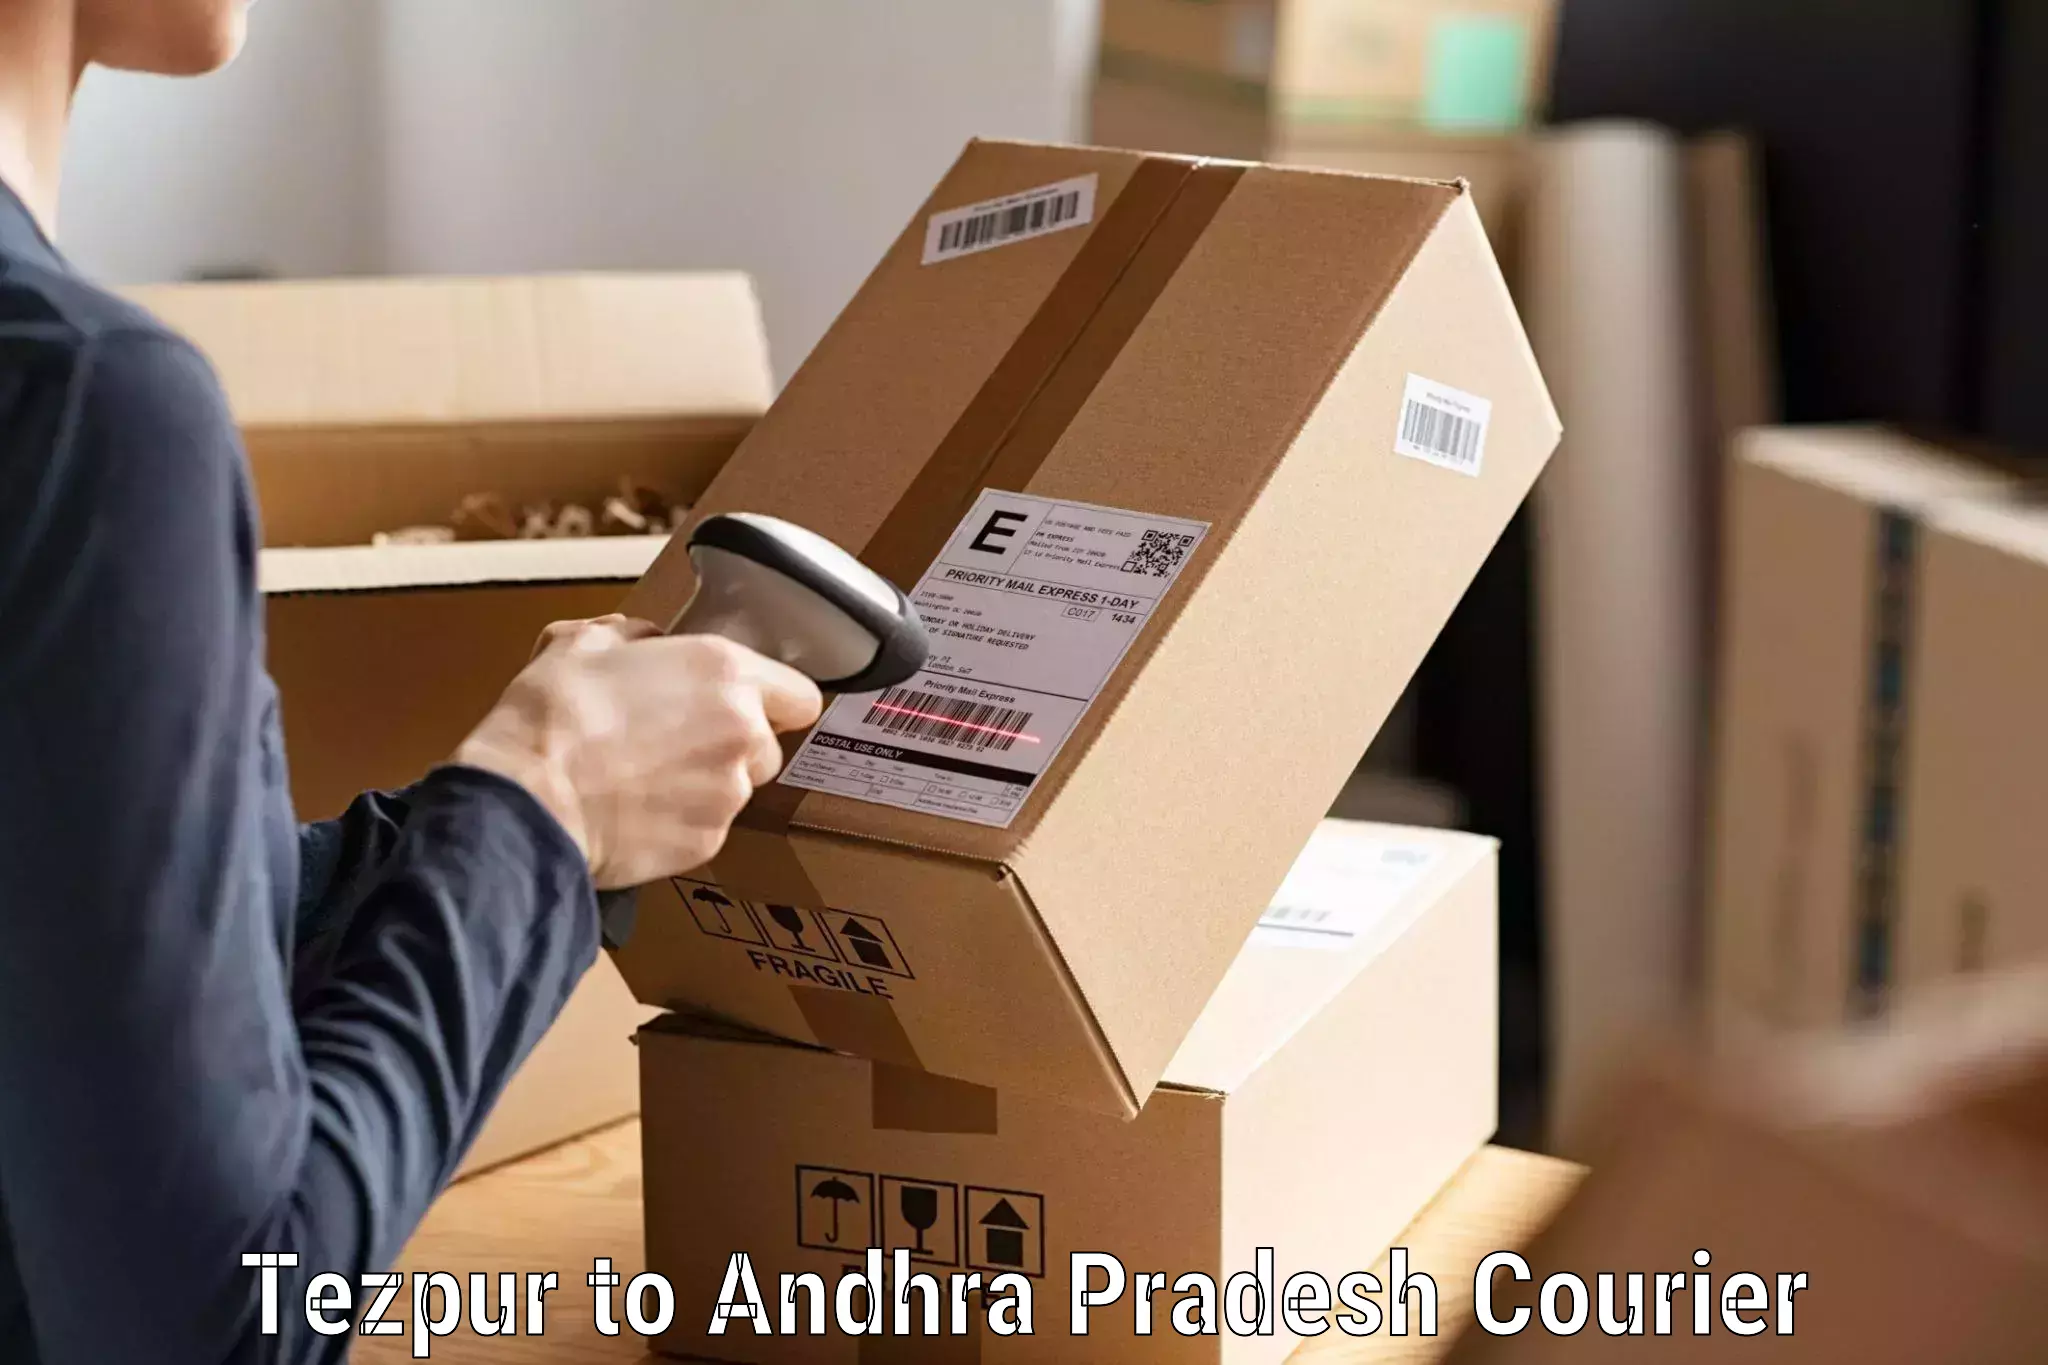 Customer-focused courier Tezpur to Vijayawada